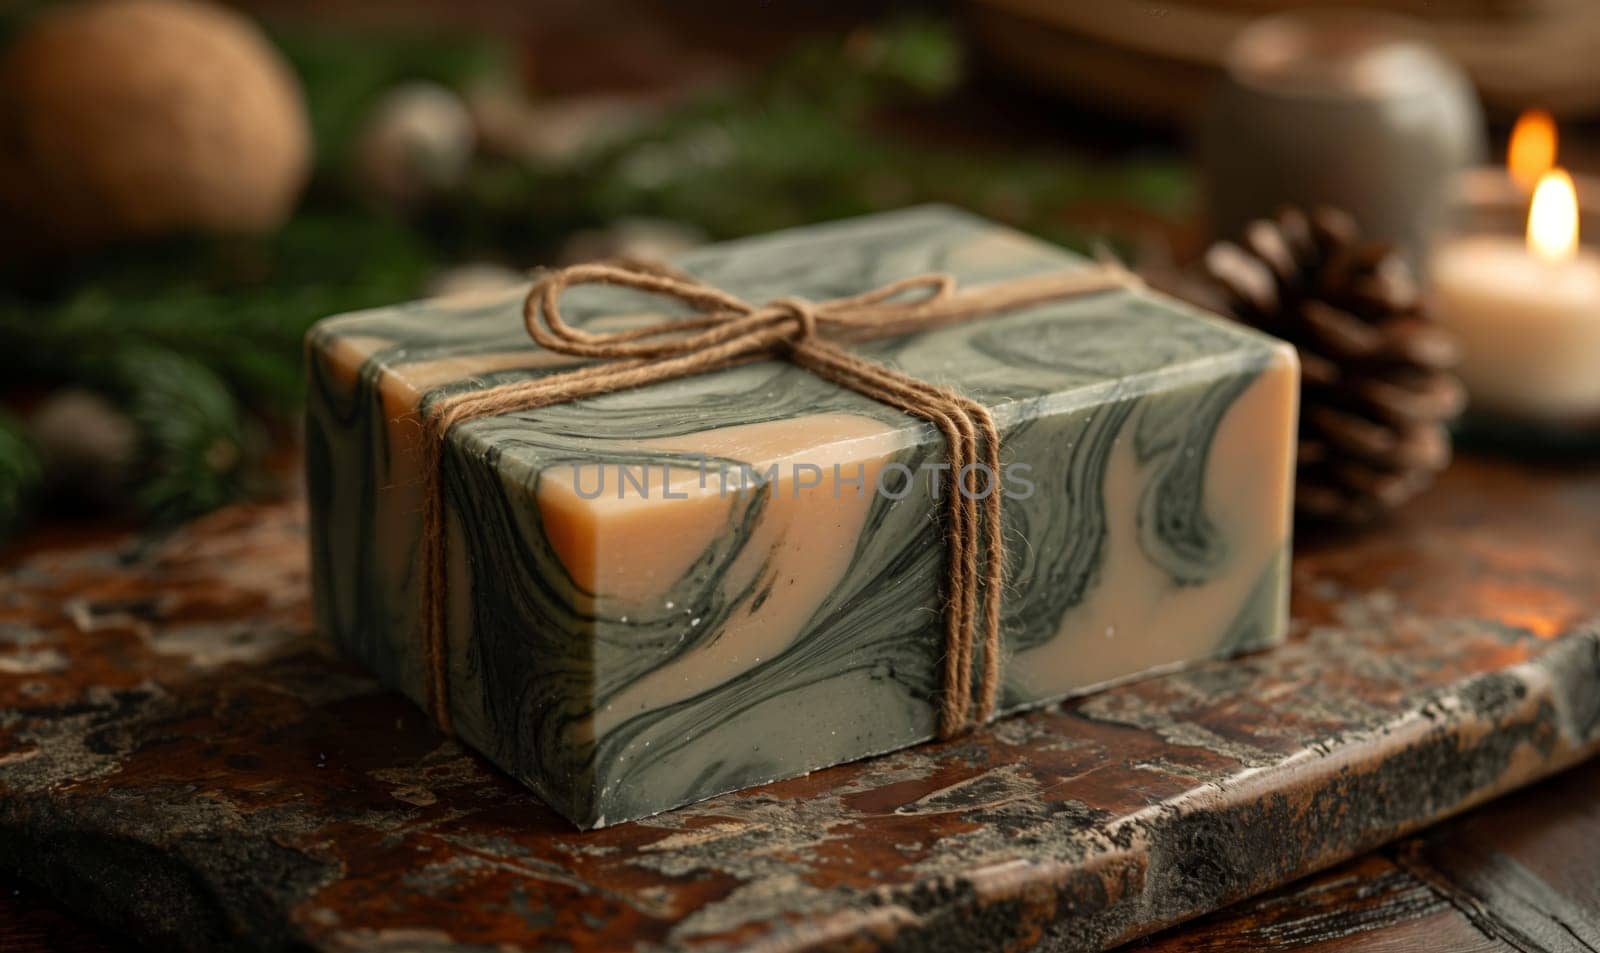 Handmade soap as a gift. by Fischeron